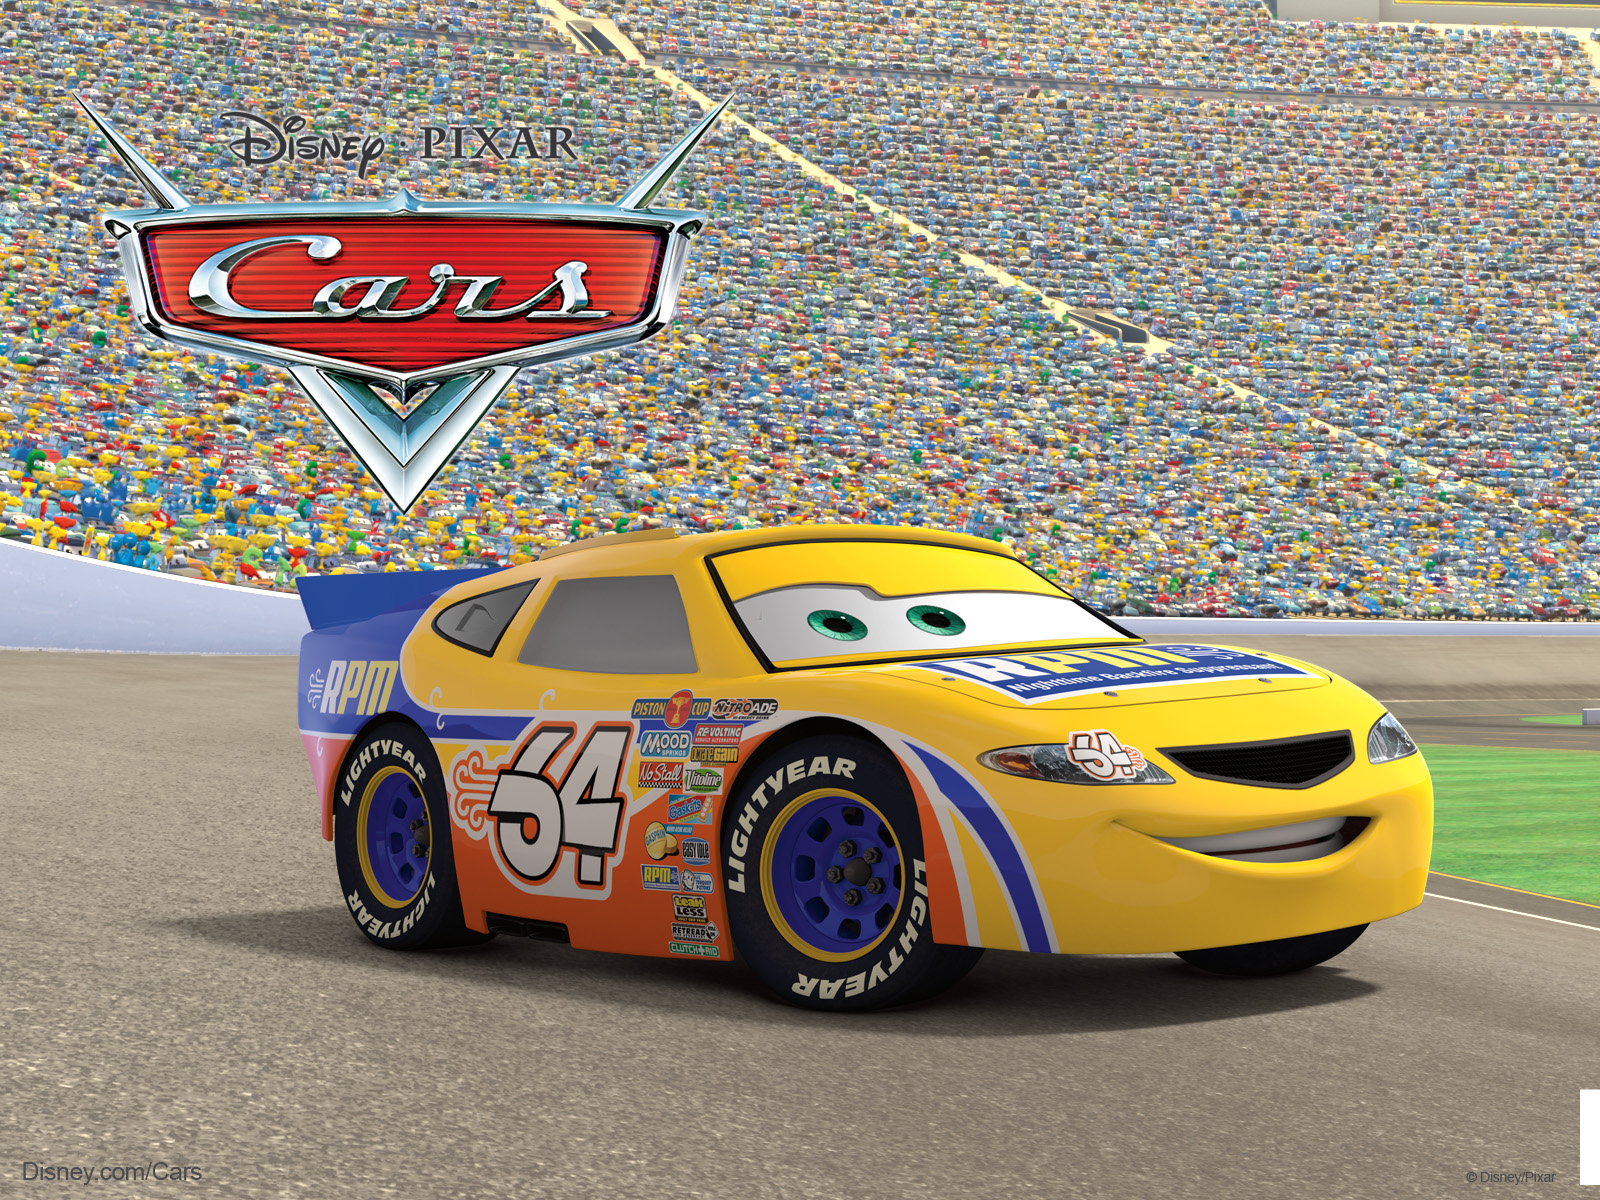 Winford Rutherford Race Car From Pixar Cars Movie Desktop Wallpaper